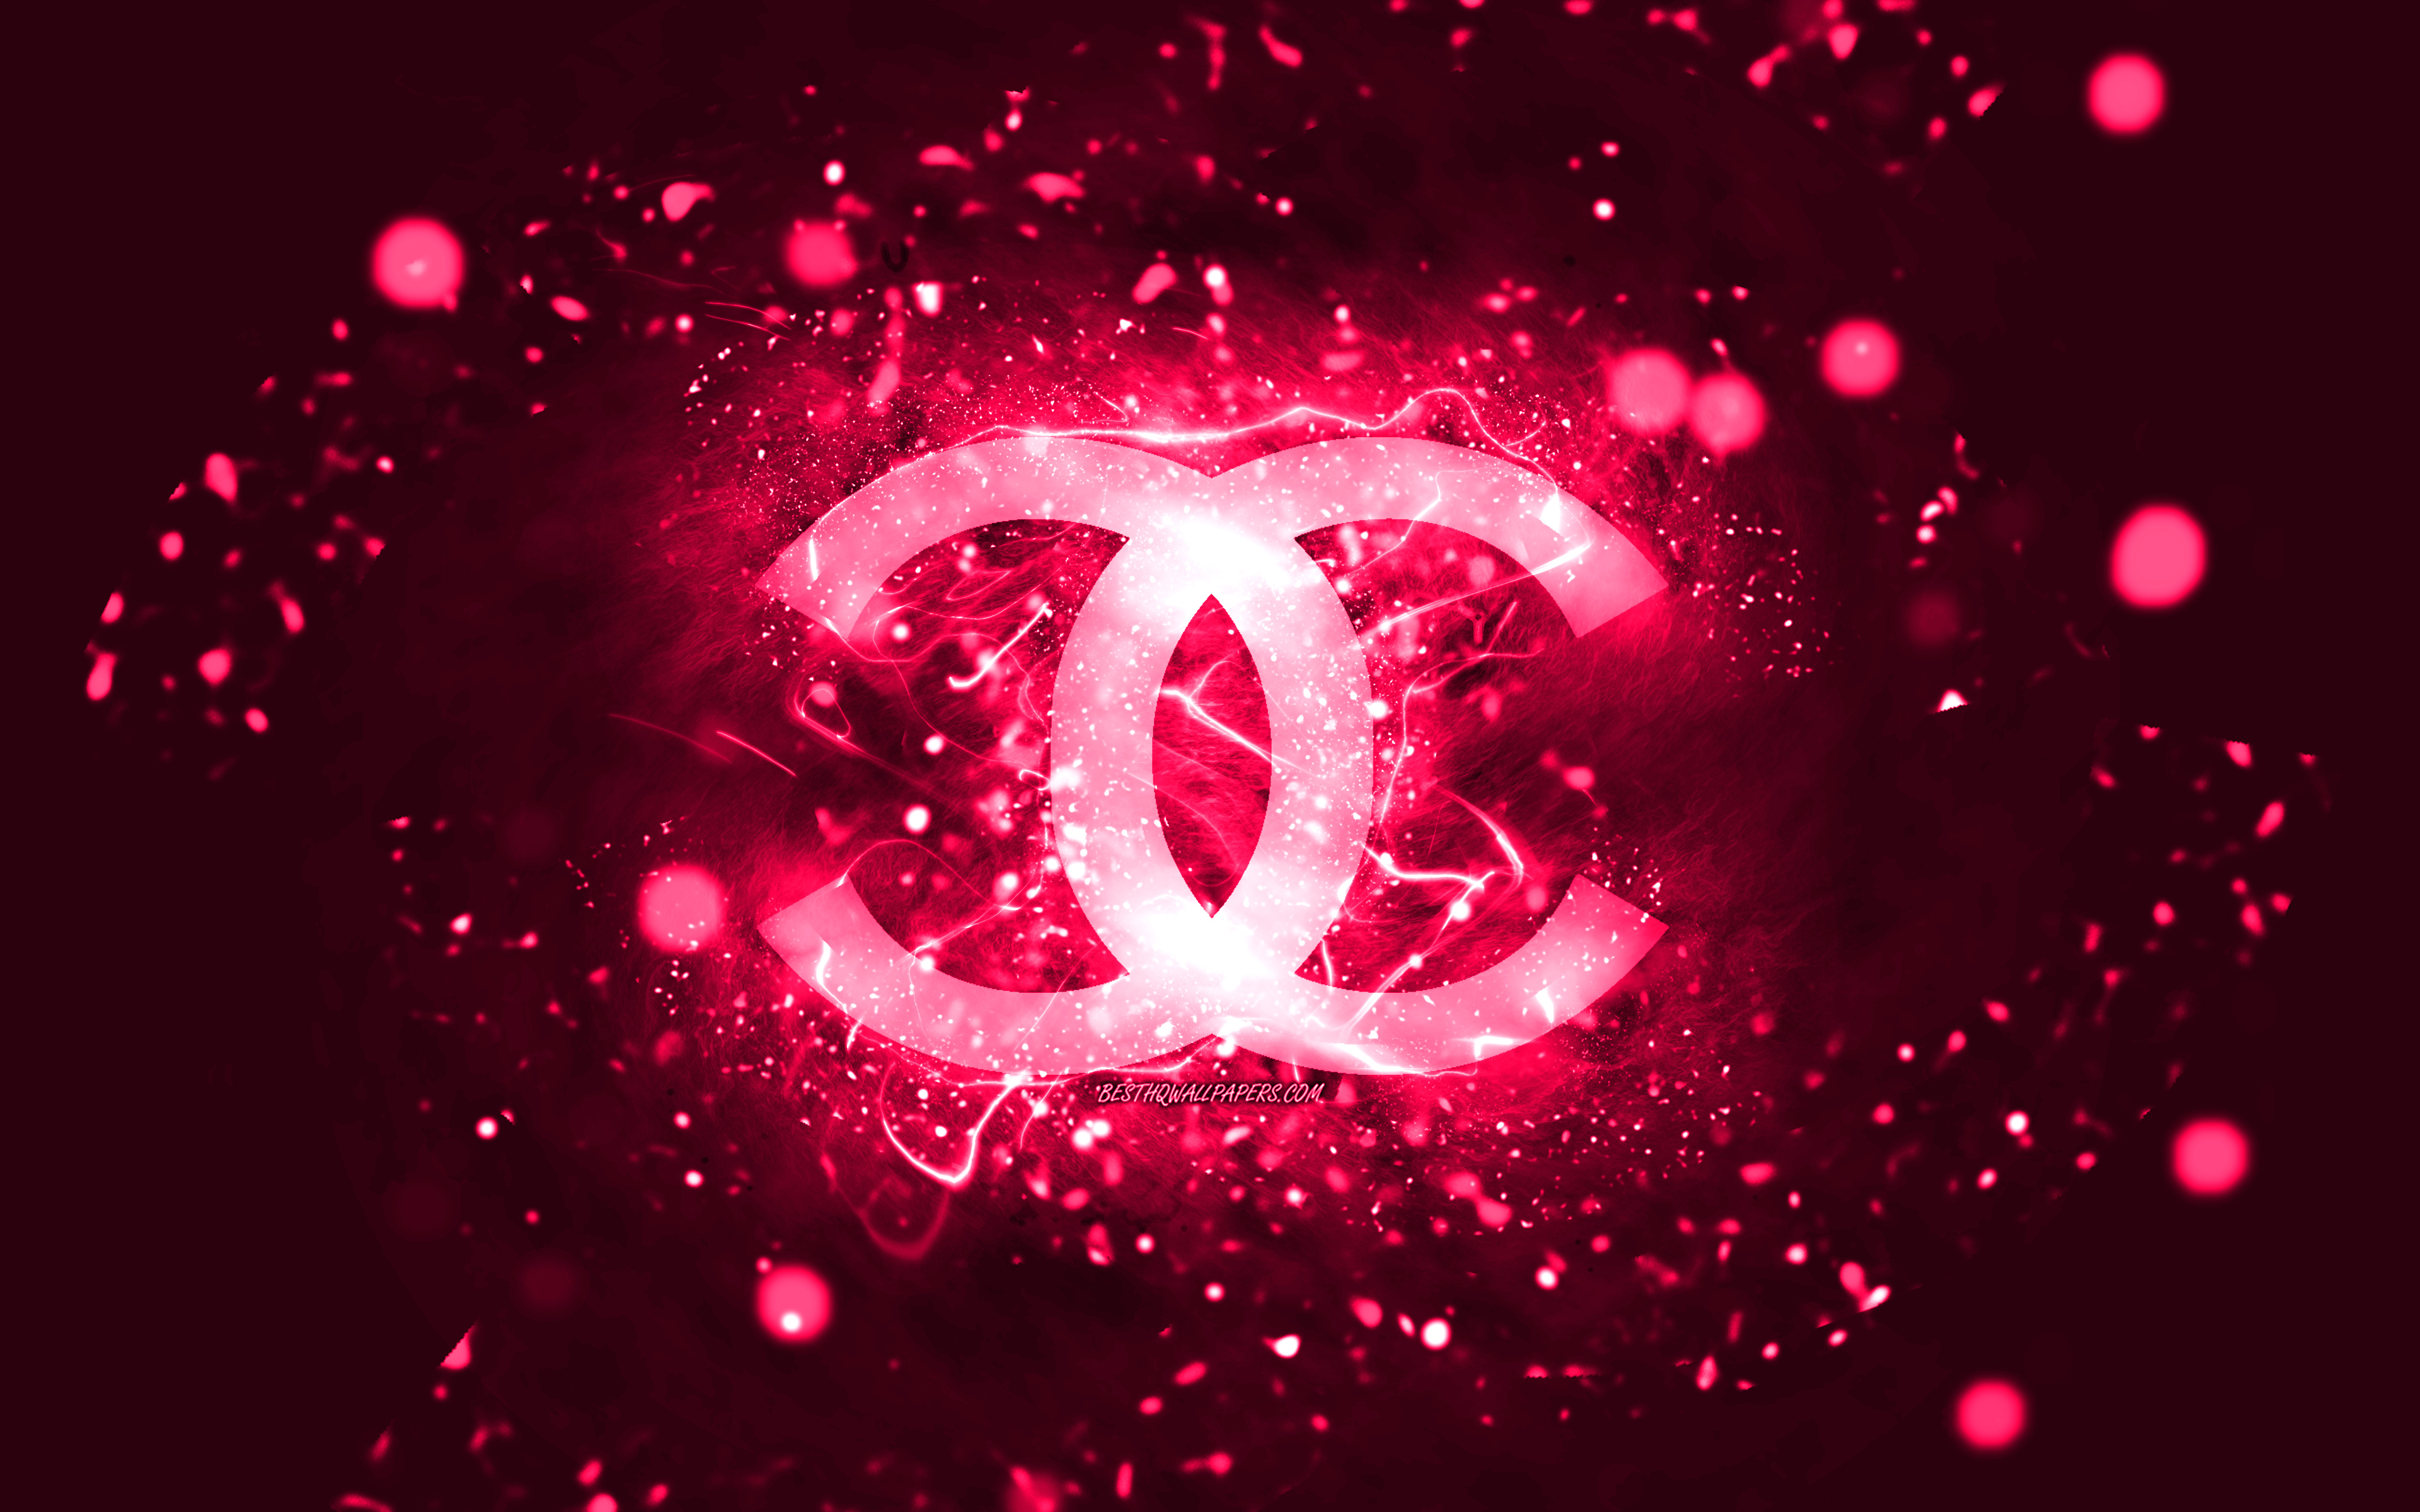 Download wallpapers Chanel pink logo, 4k, pink neon lights, creative ...